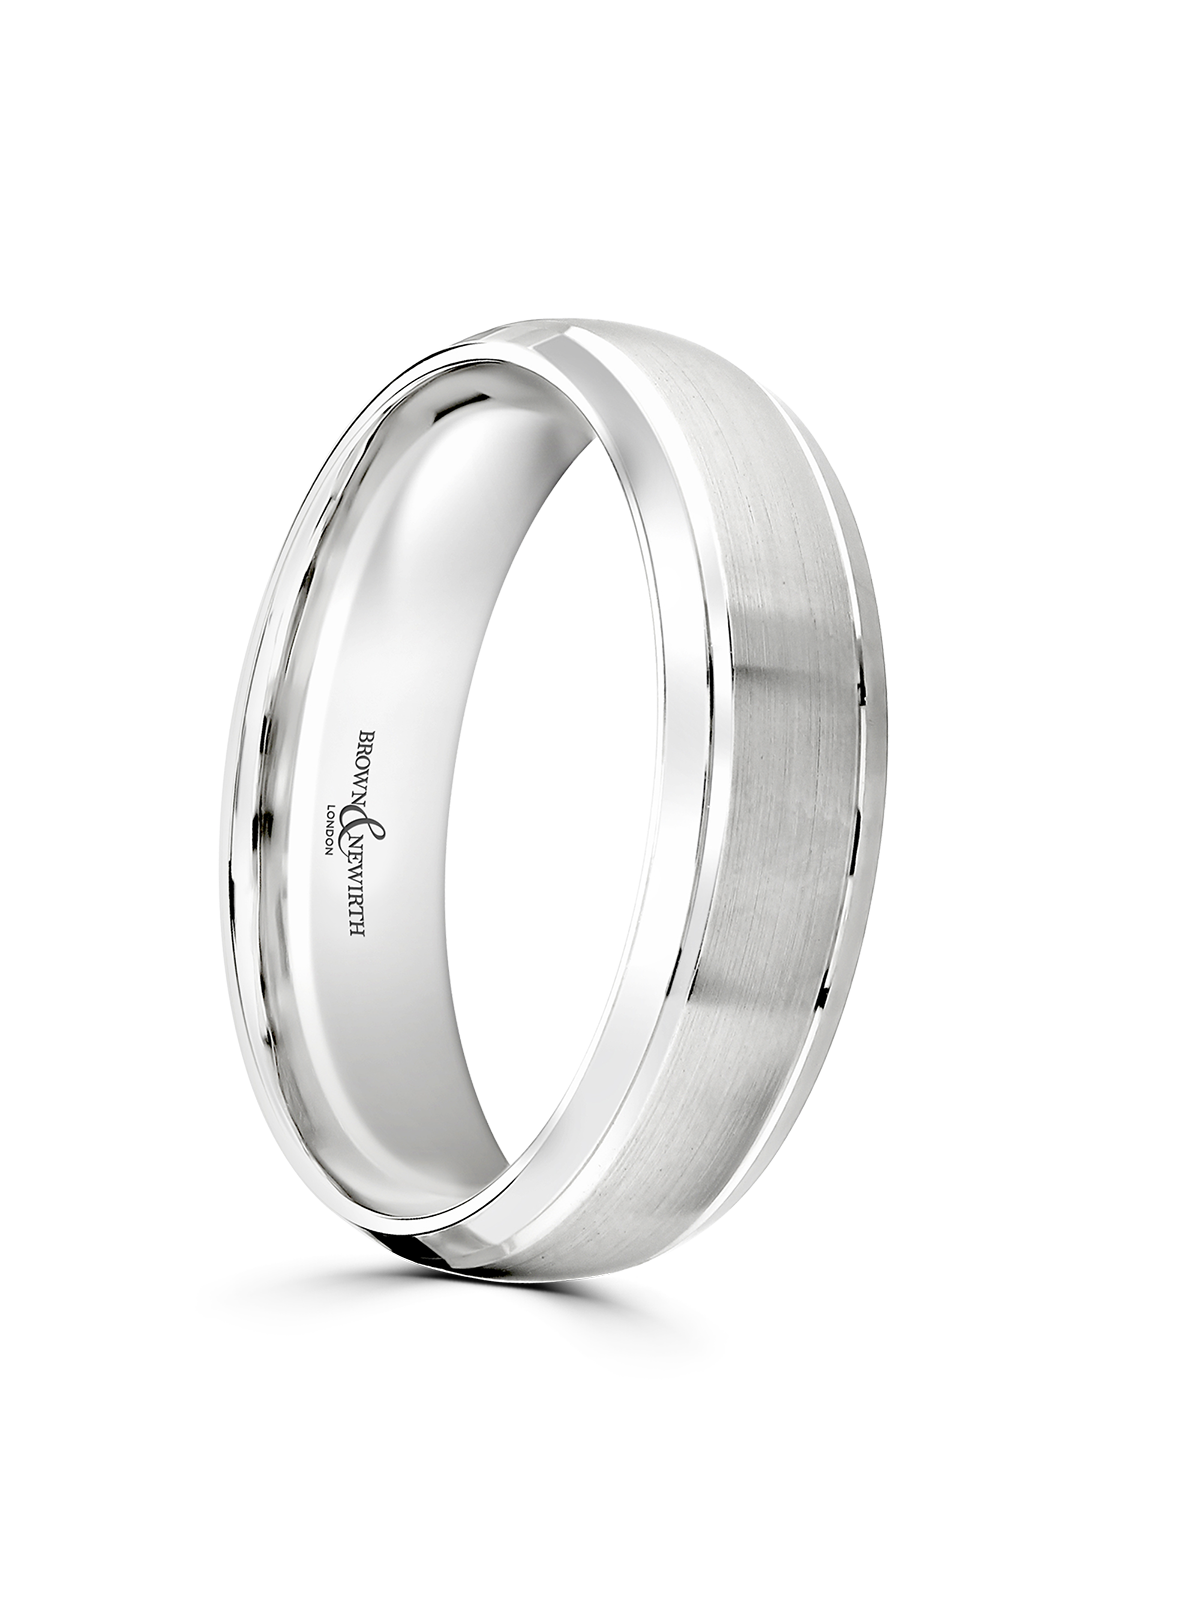 Brown & Newirth Element 6mm Patterned Wedding Ring in Platinum